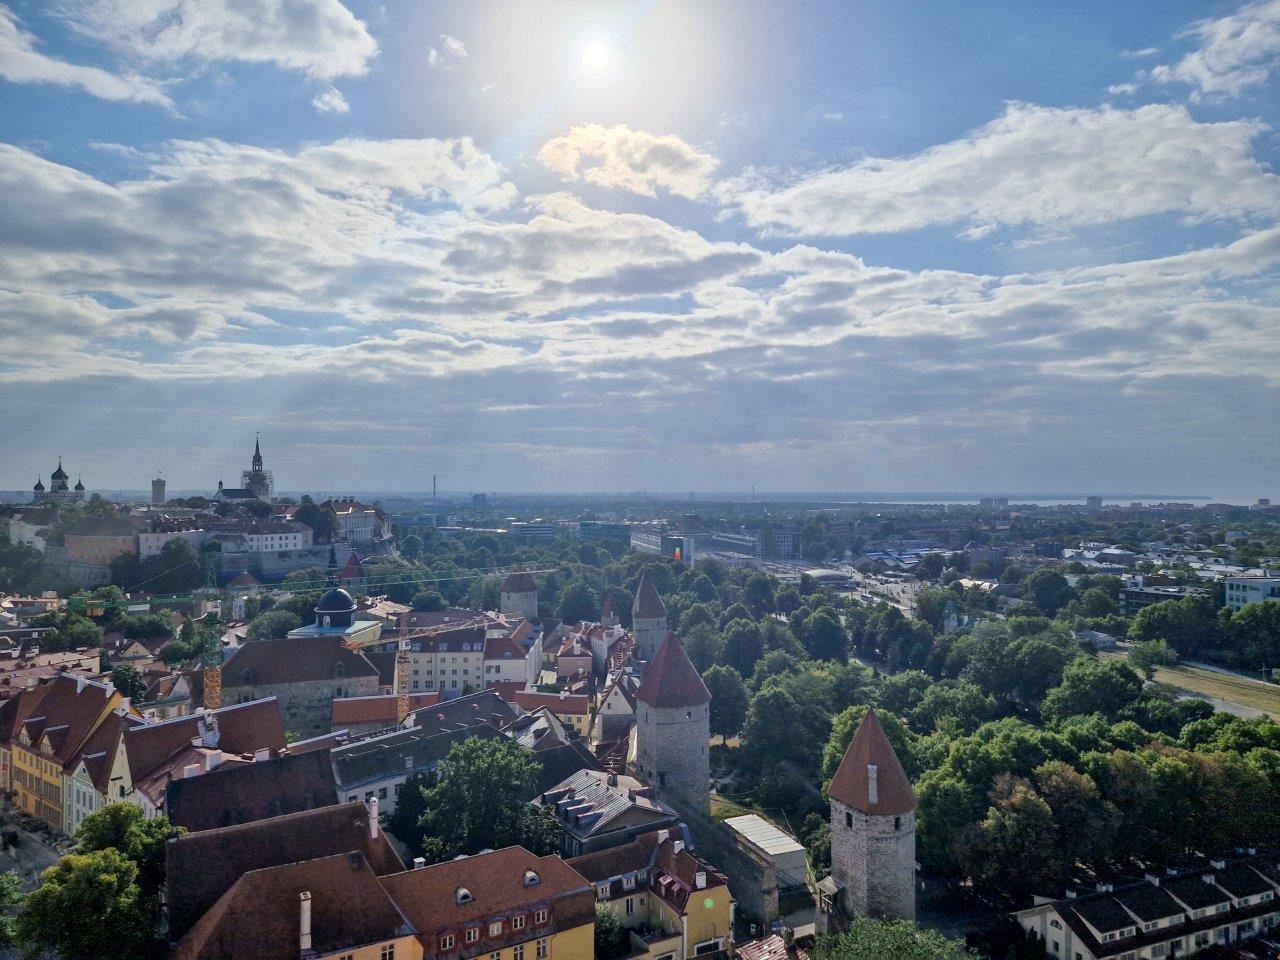 Het uitzicht vanaf de St. Olafs Kerk in Tallinn